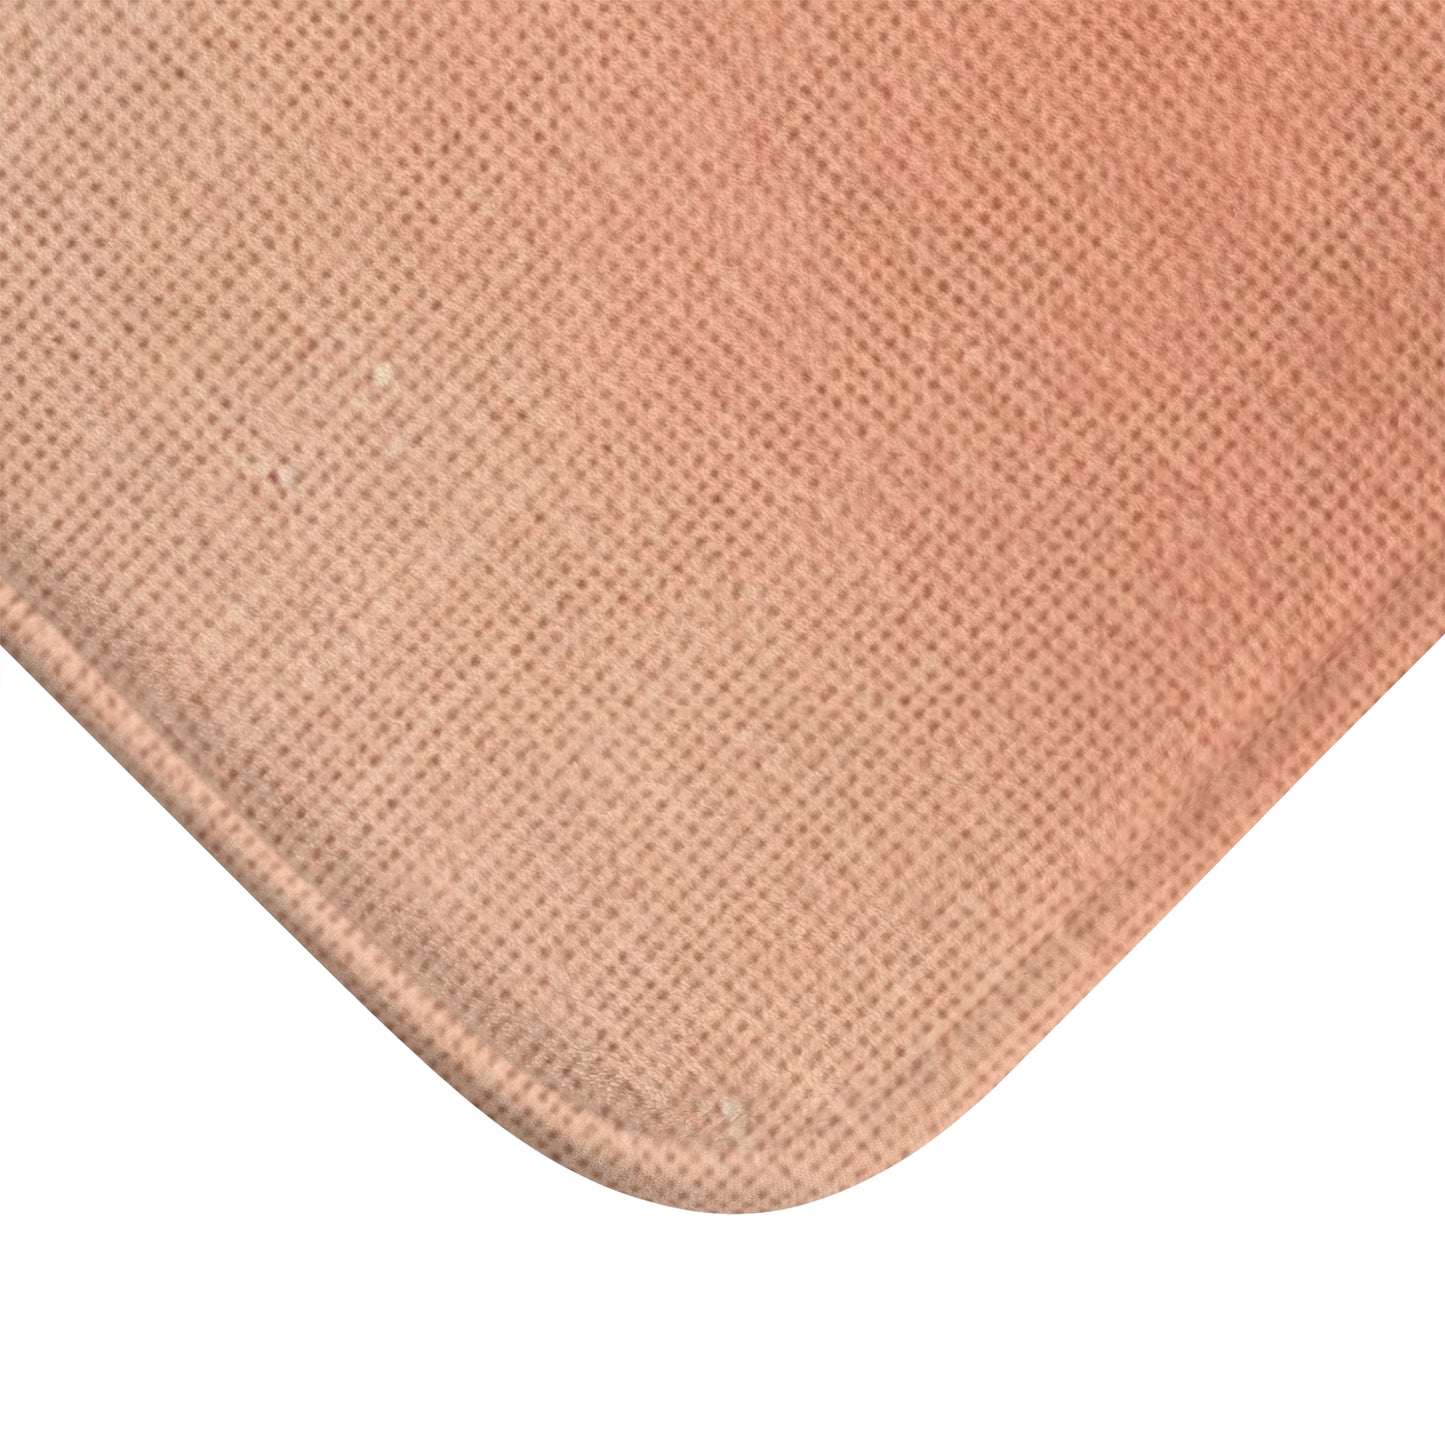 Soft Pink-Orange Peach: Denim-Inspired, Lush Fabric - Bath Mat